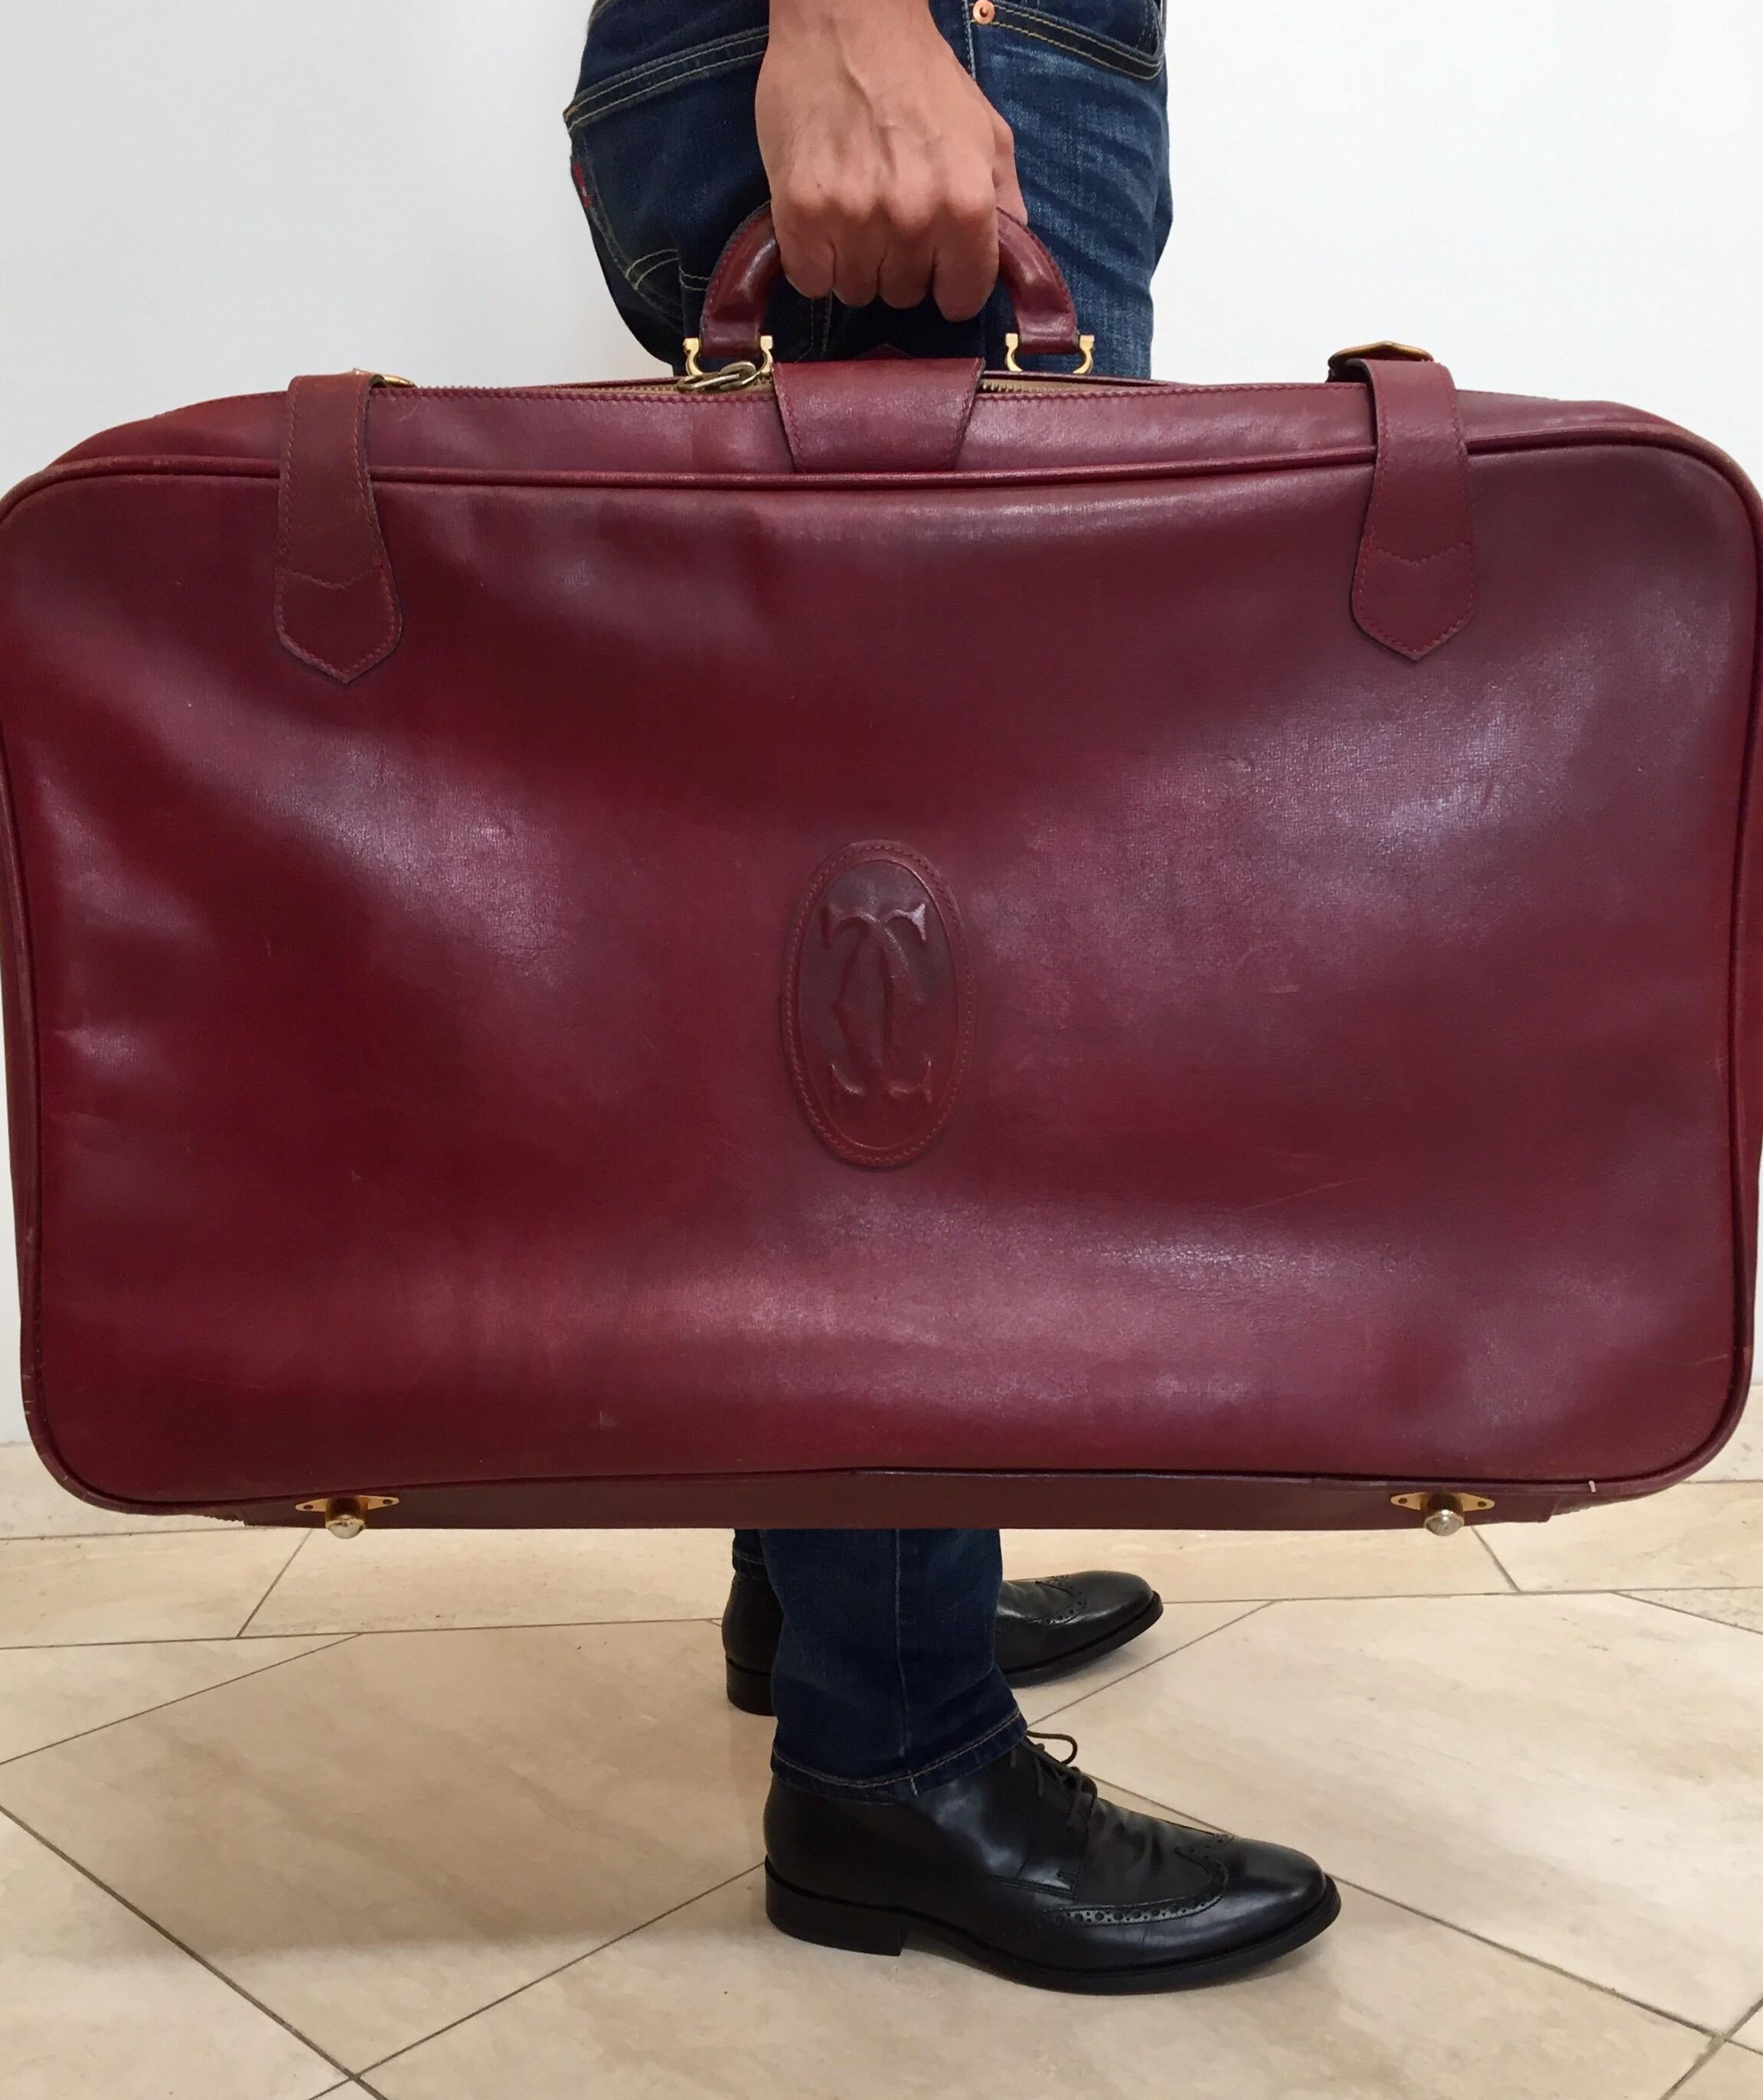 Vintage-Lederkoffer Burgunderrotes Bordeaux-Gepäck von Must de Cartier im Angebot 9